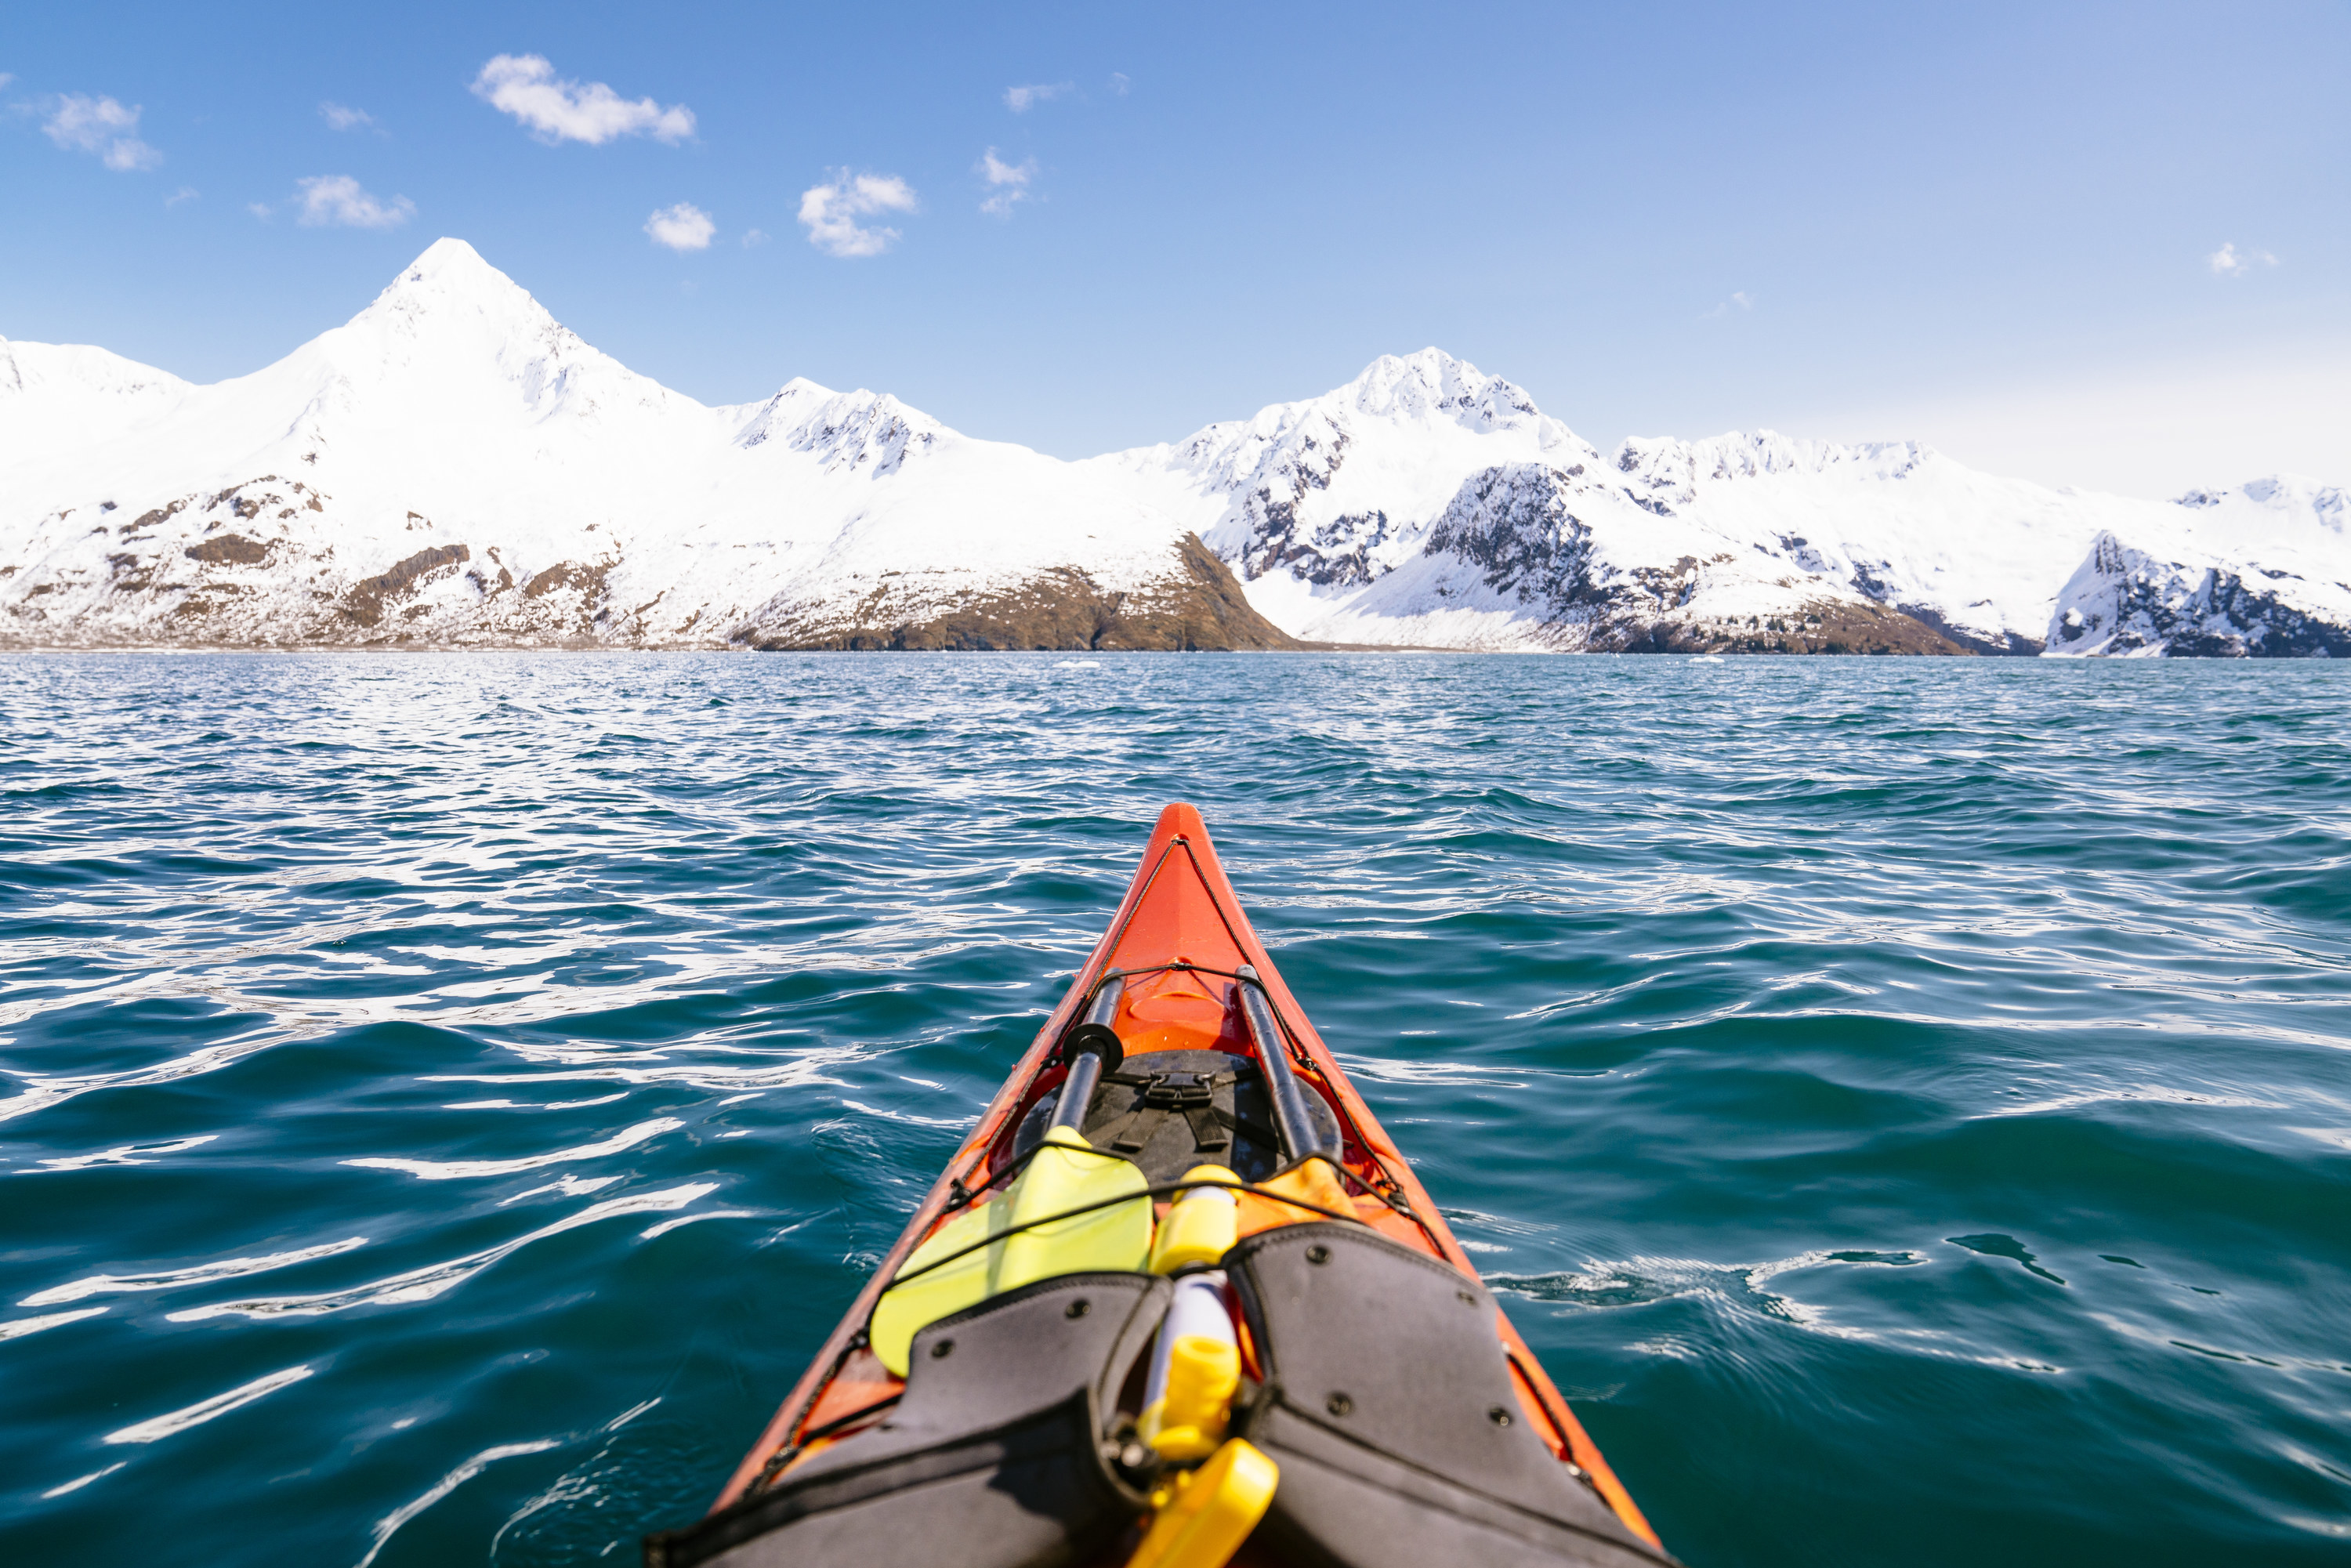 Kayak on the water in Alaska